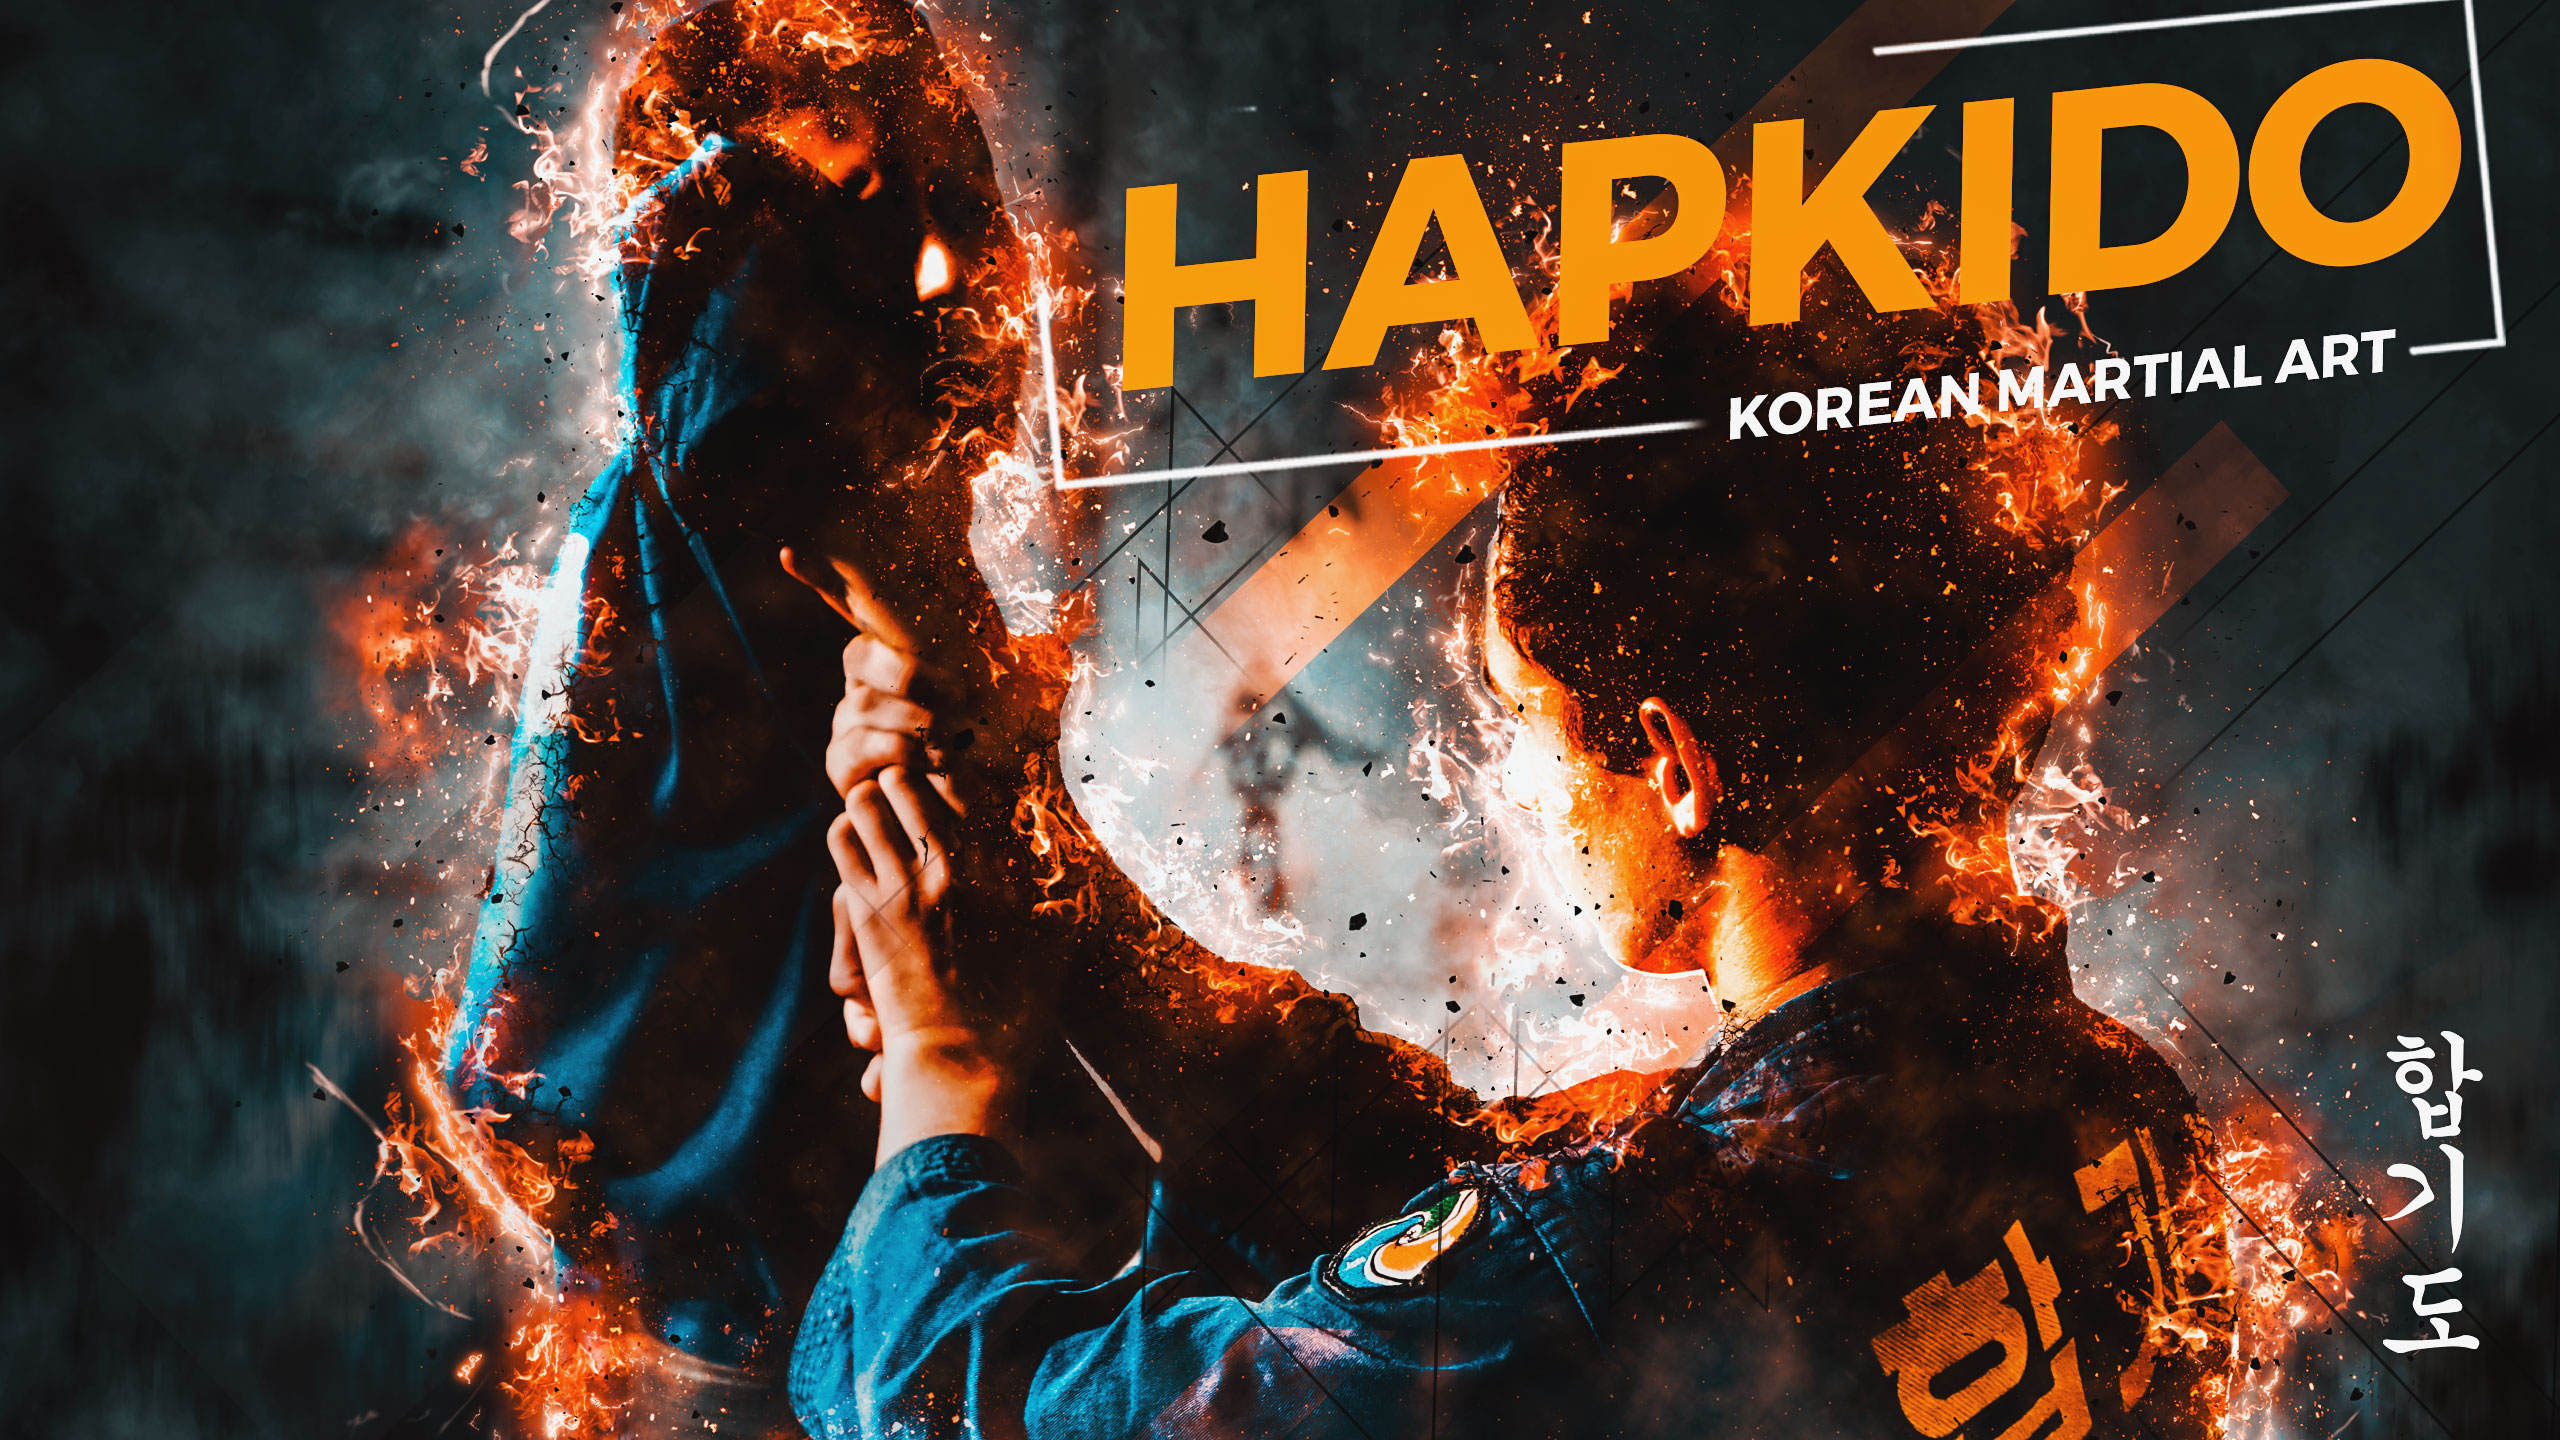 Wallpaper, korean martial arts, hapkido, HAPKIDO CKA 2560x1440